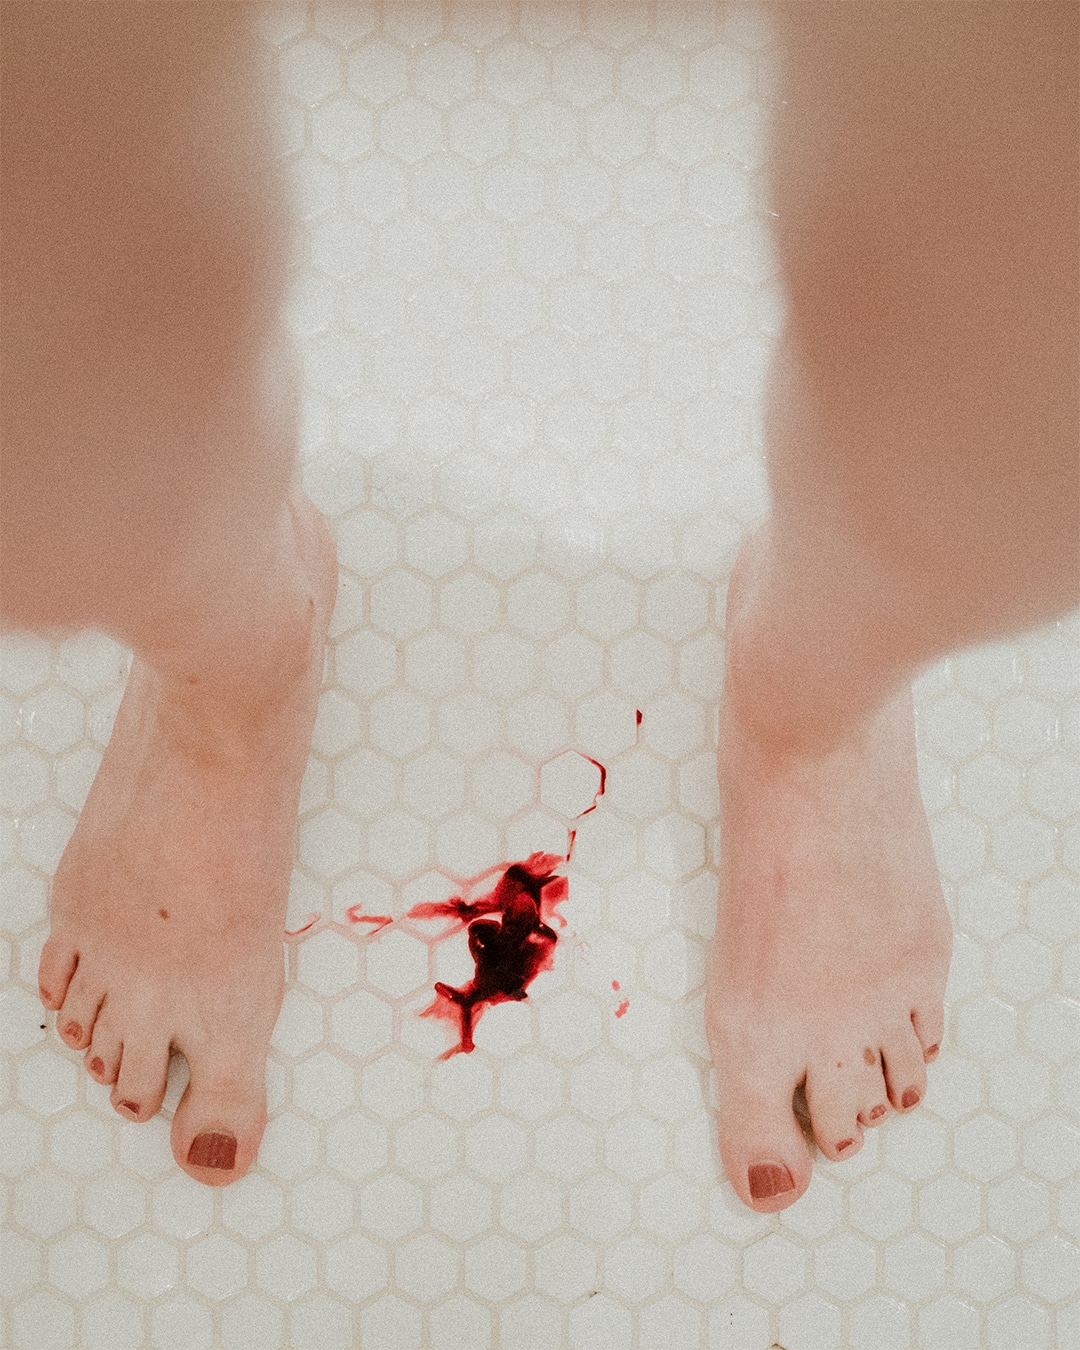 menstrual blood on bathroom floor